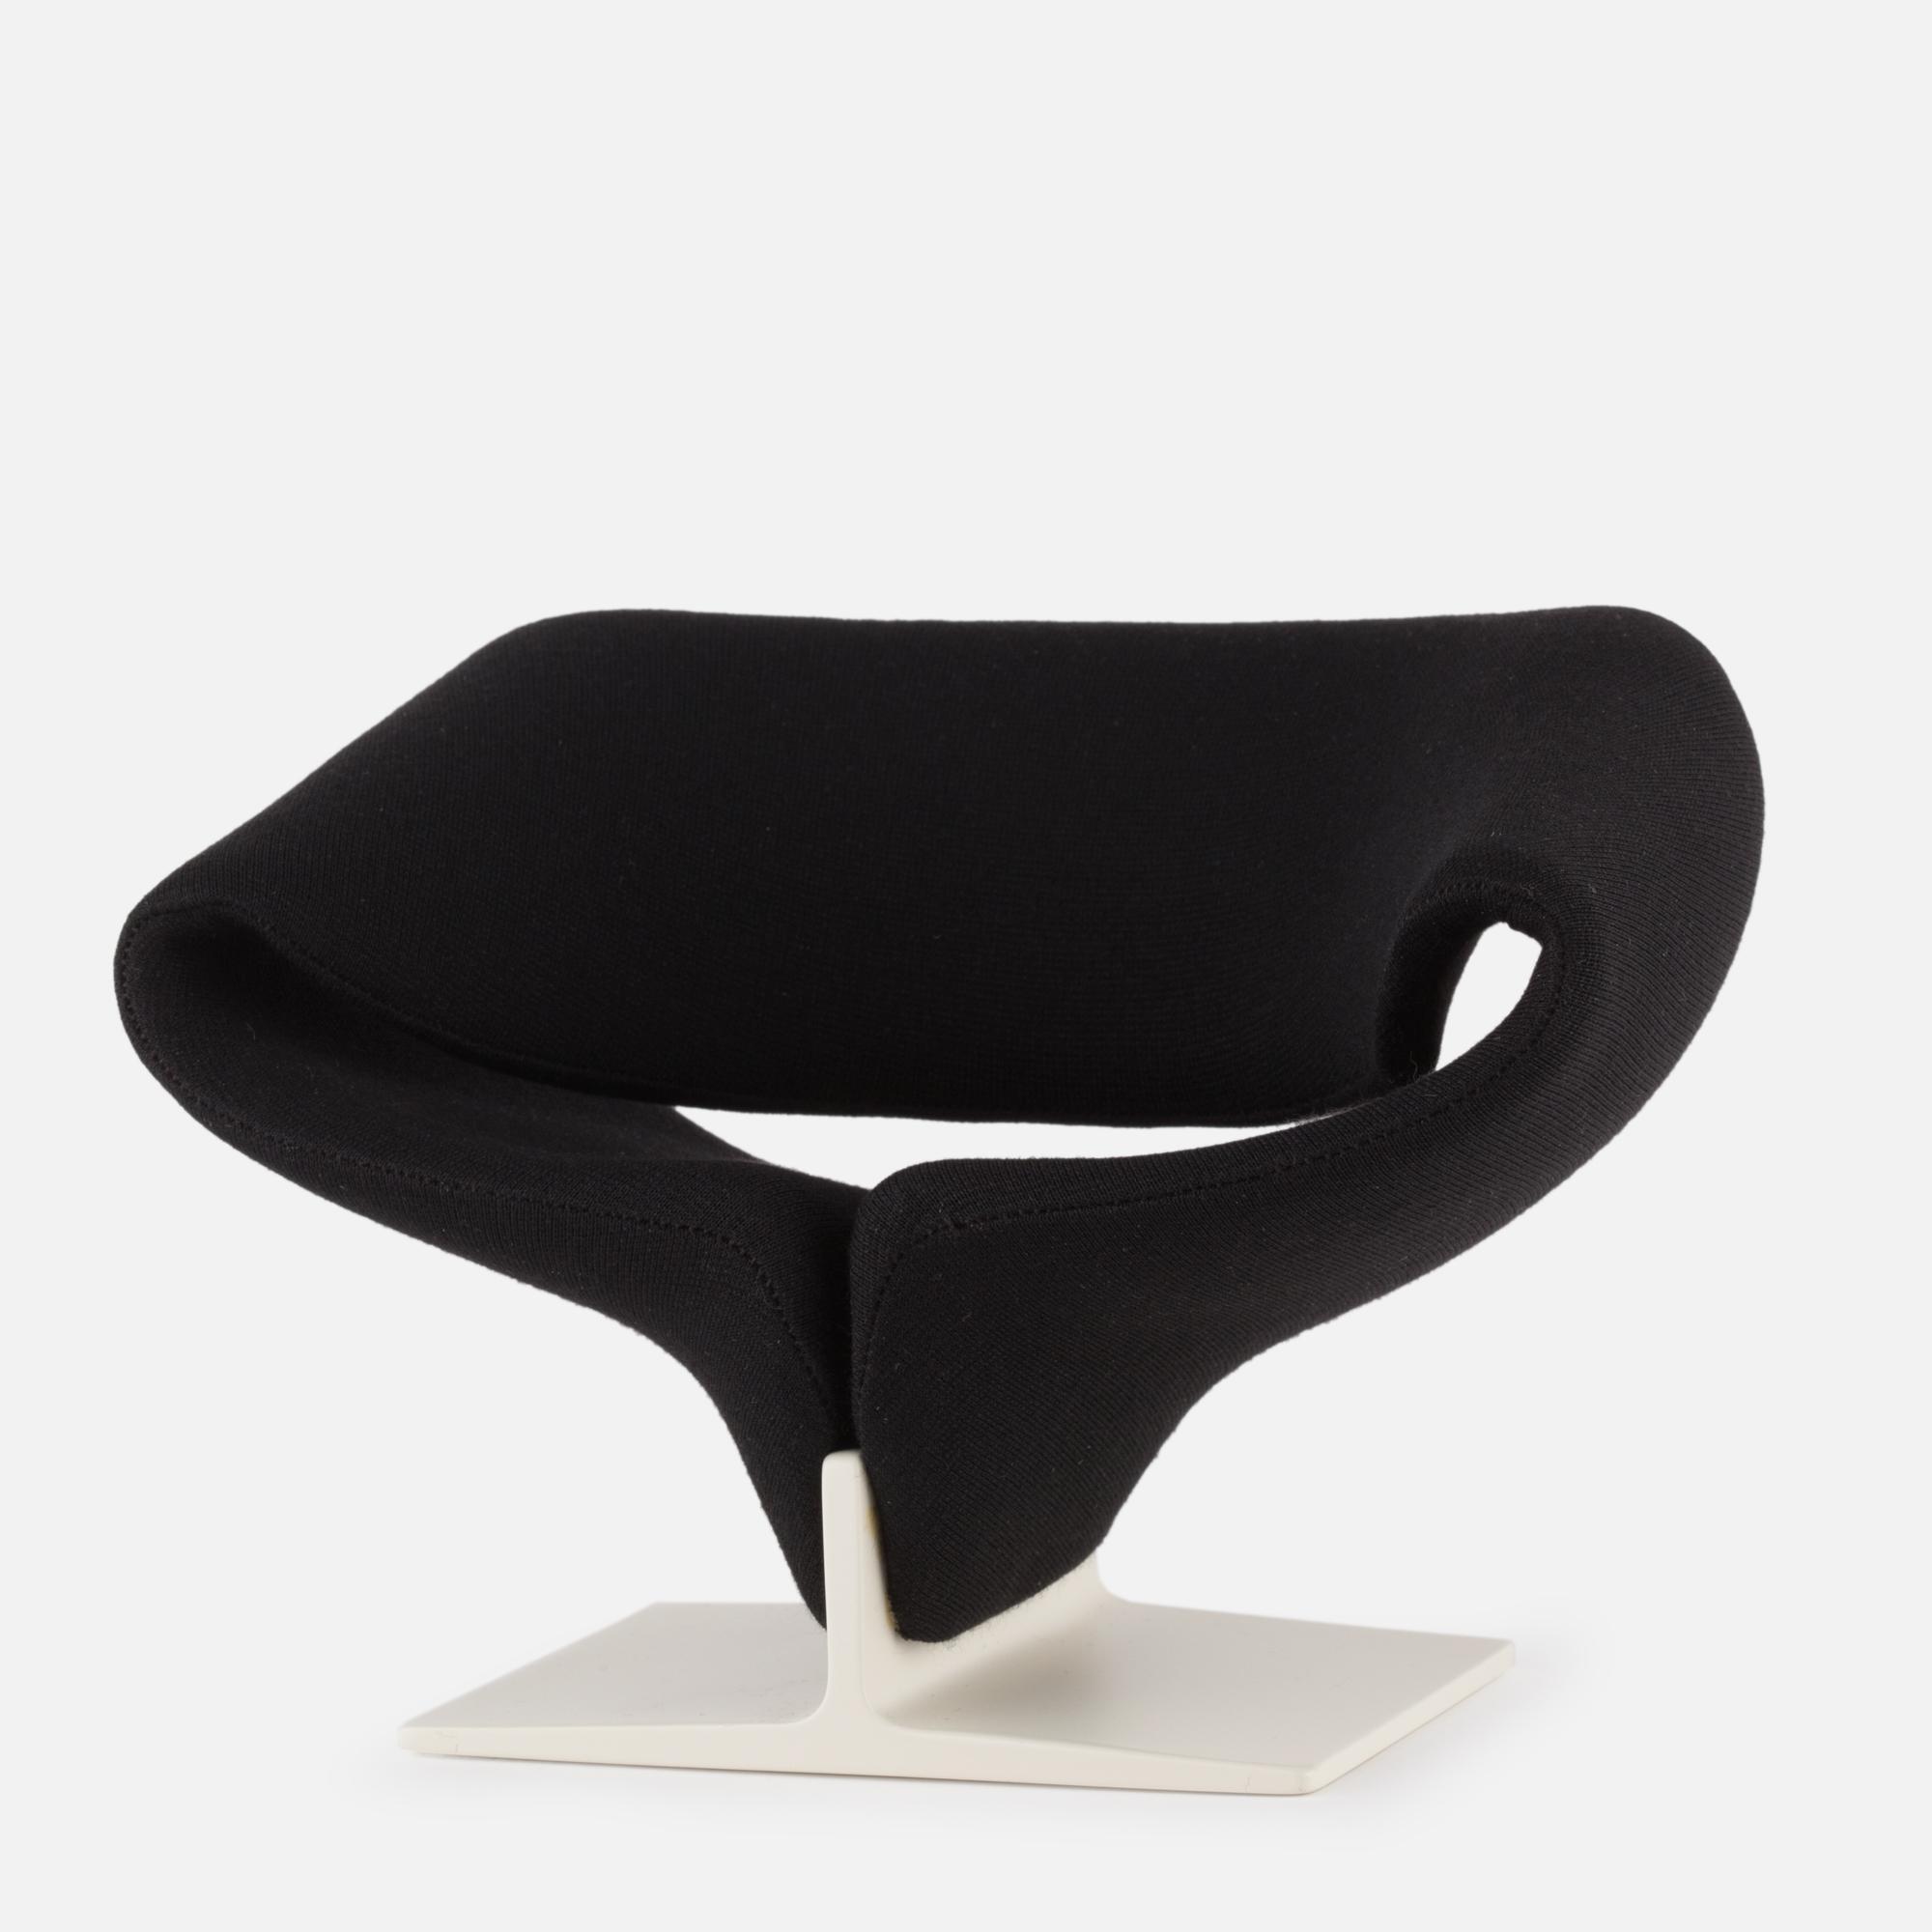 Miniature Pierre Paulin’s Ribbon chair, 1966